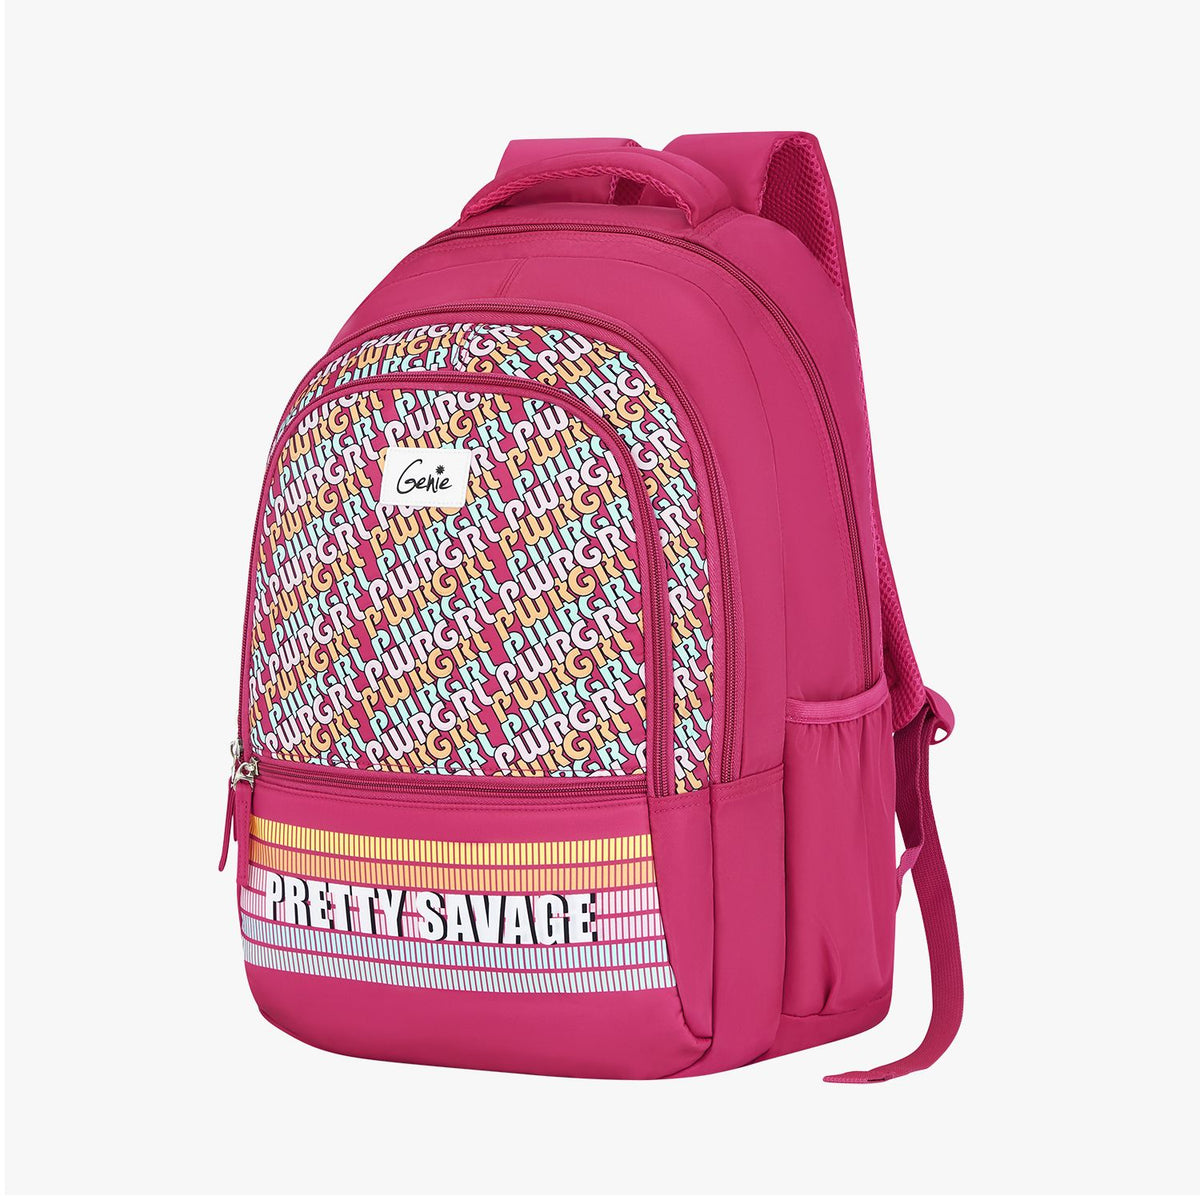 Girl Power Laptop Backpack - Pink